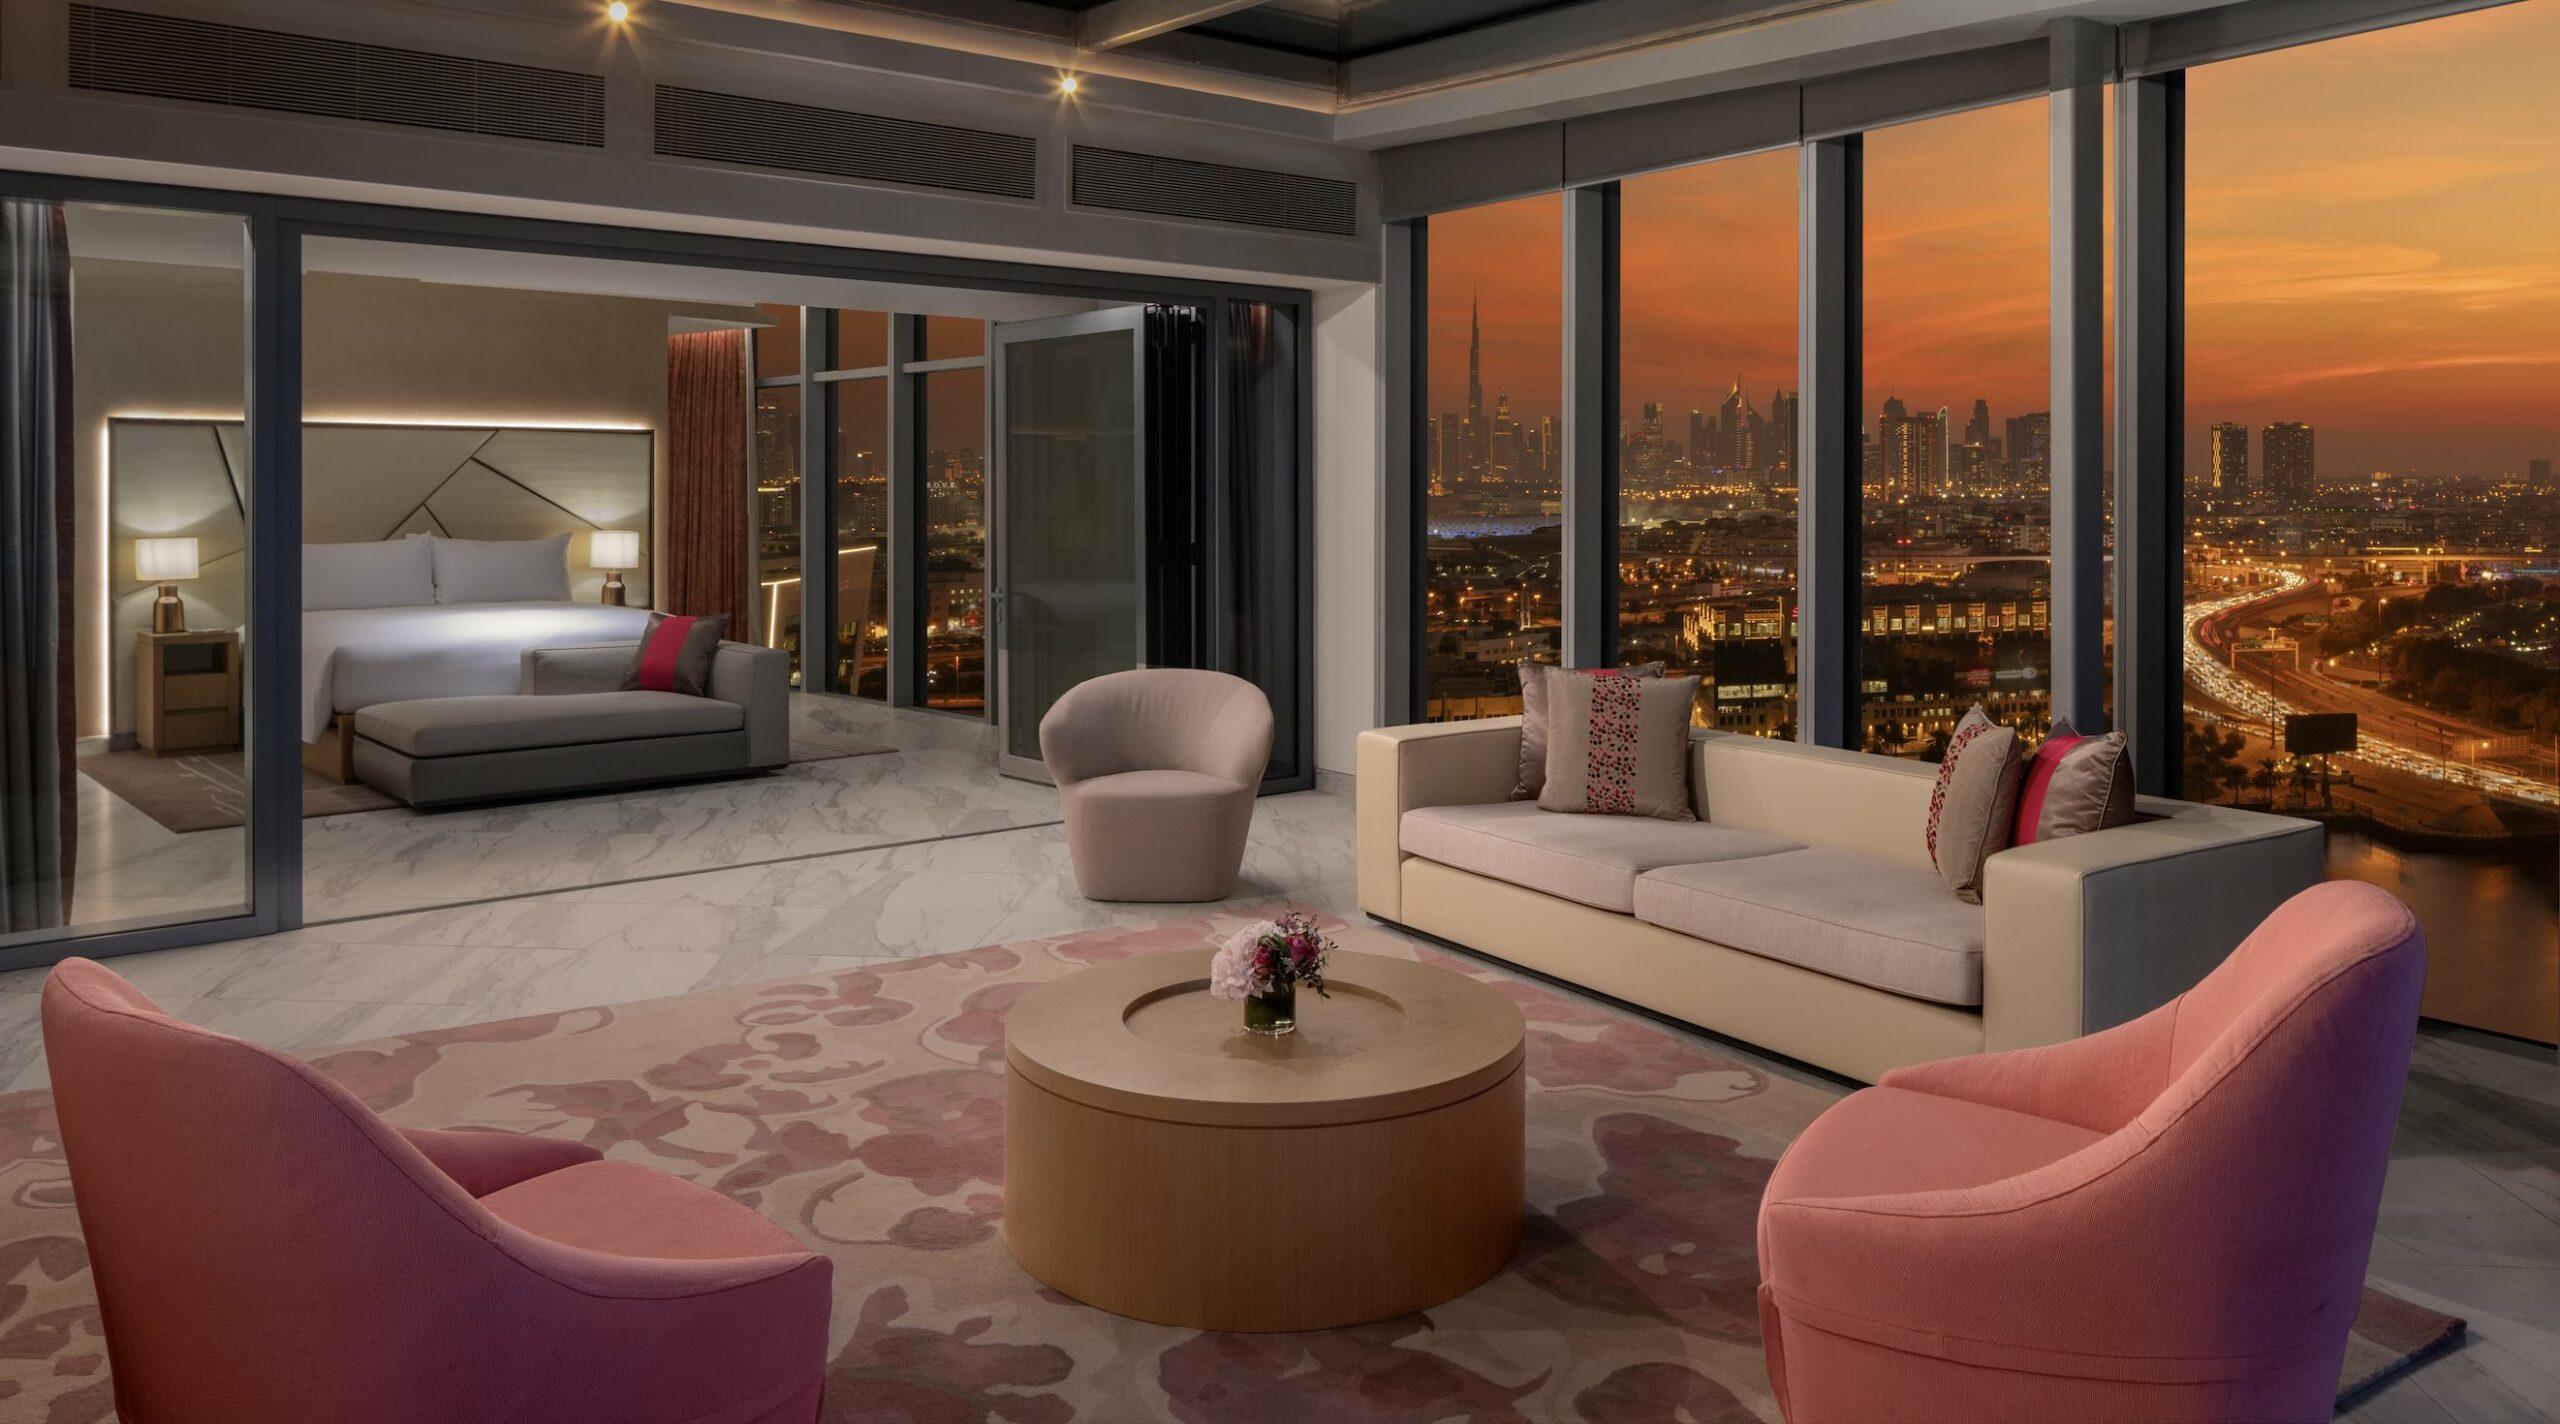 Hilton Dubai Creek Hotel &#038; Residences welcomes guests